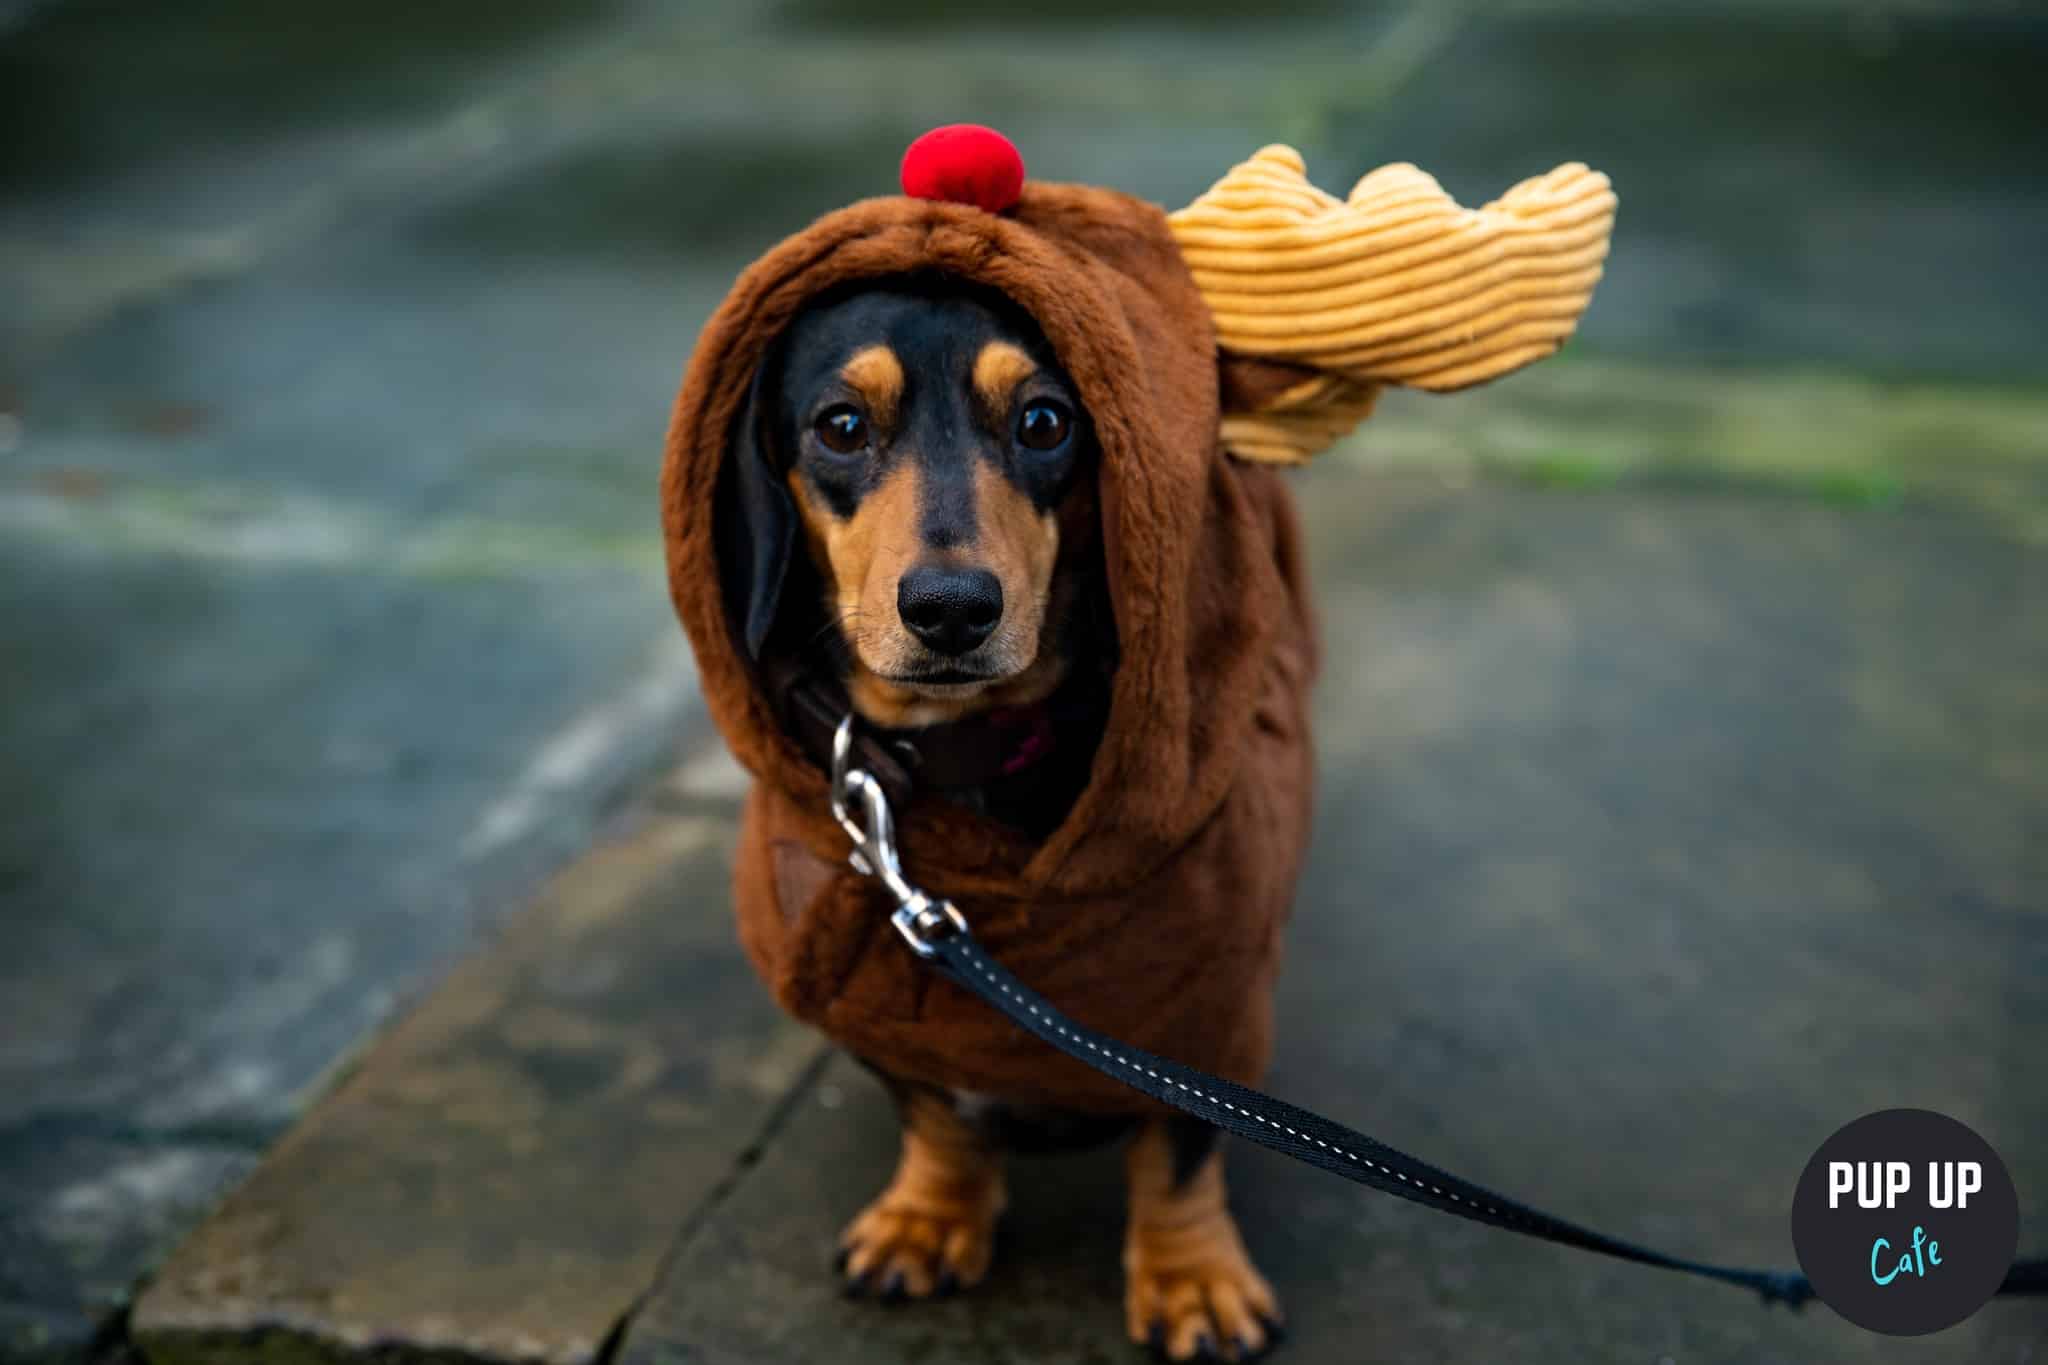 A sausage dog dressed as a Christmas pudding.